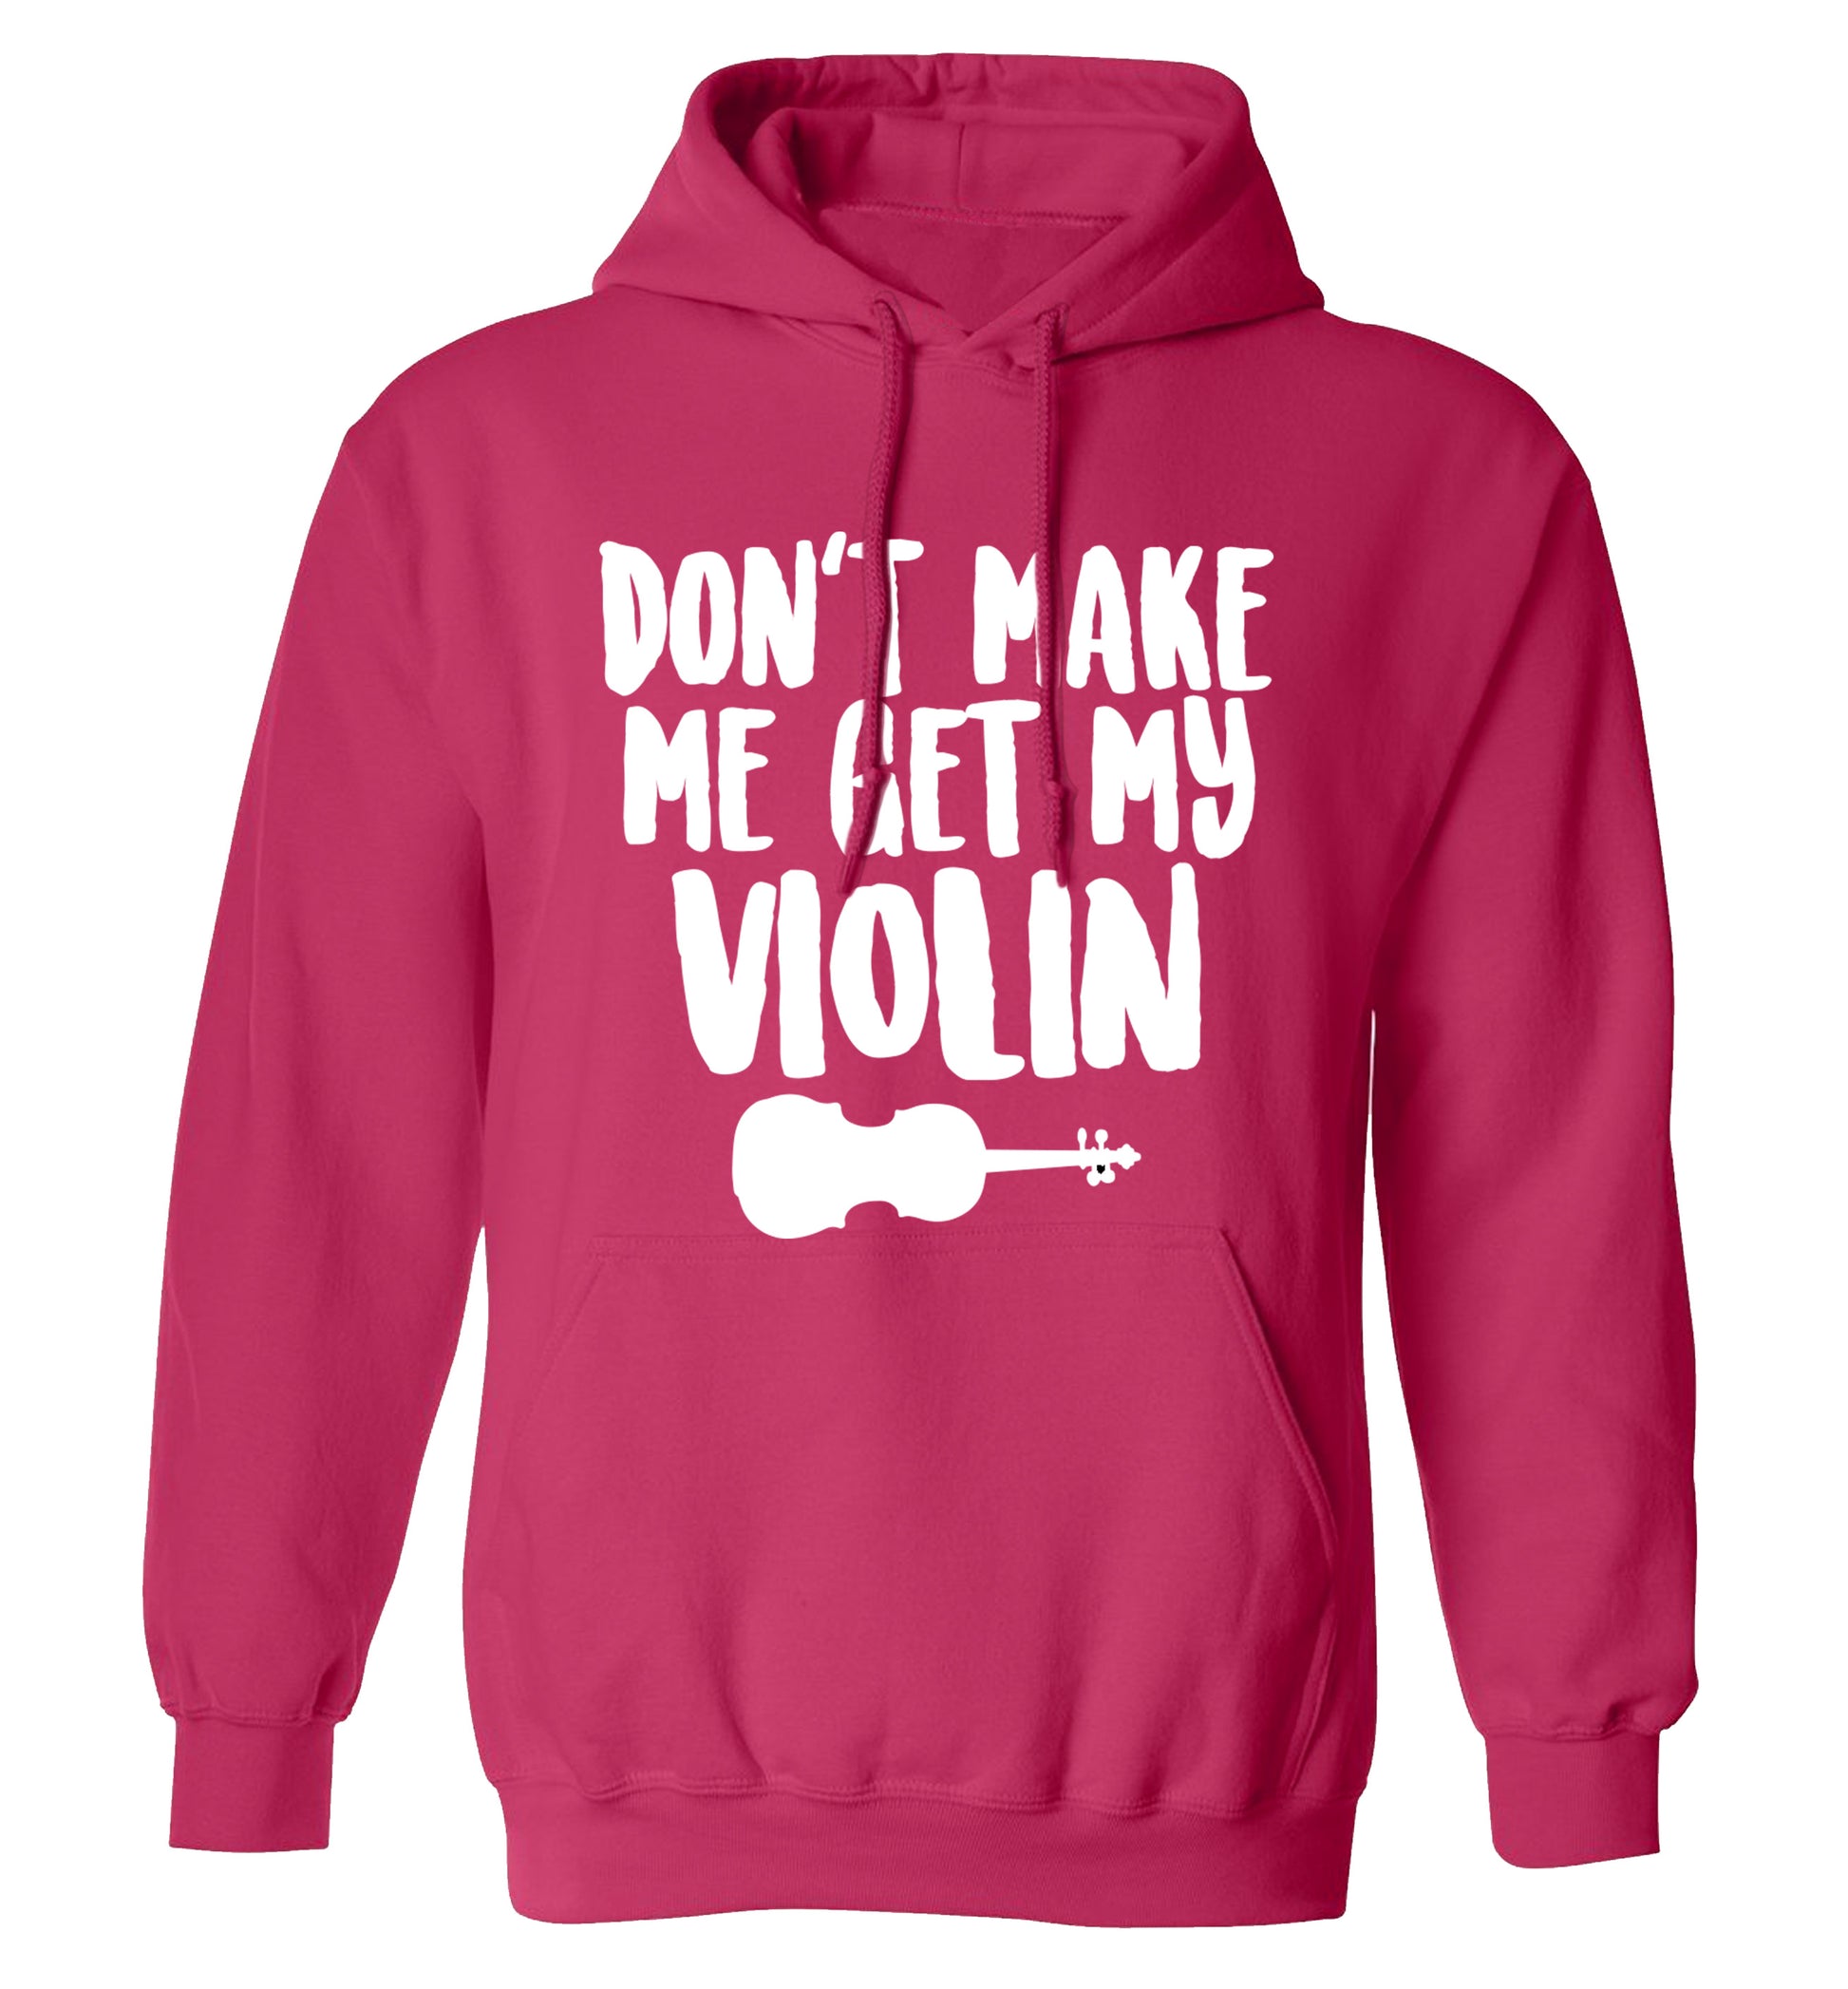 Don't make me get my violin adults unisex pink hoodie 2XL